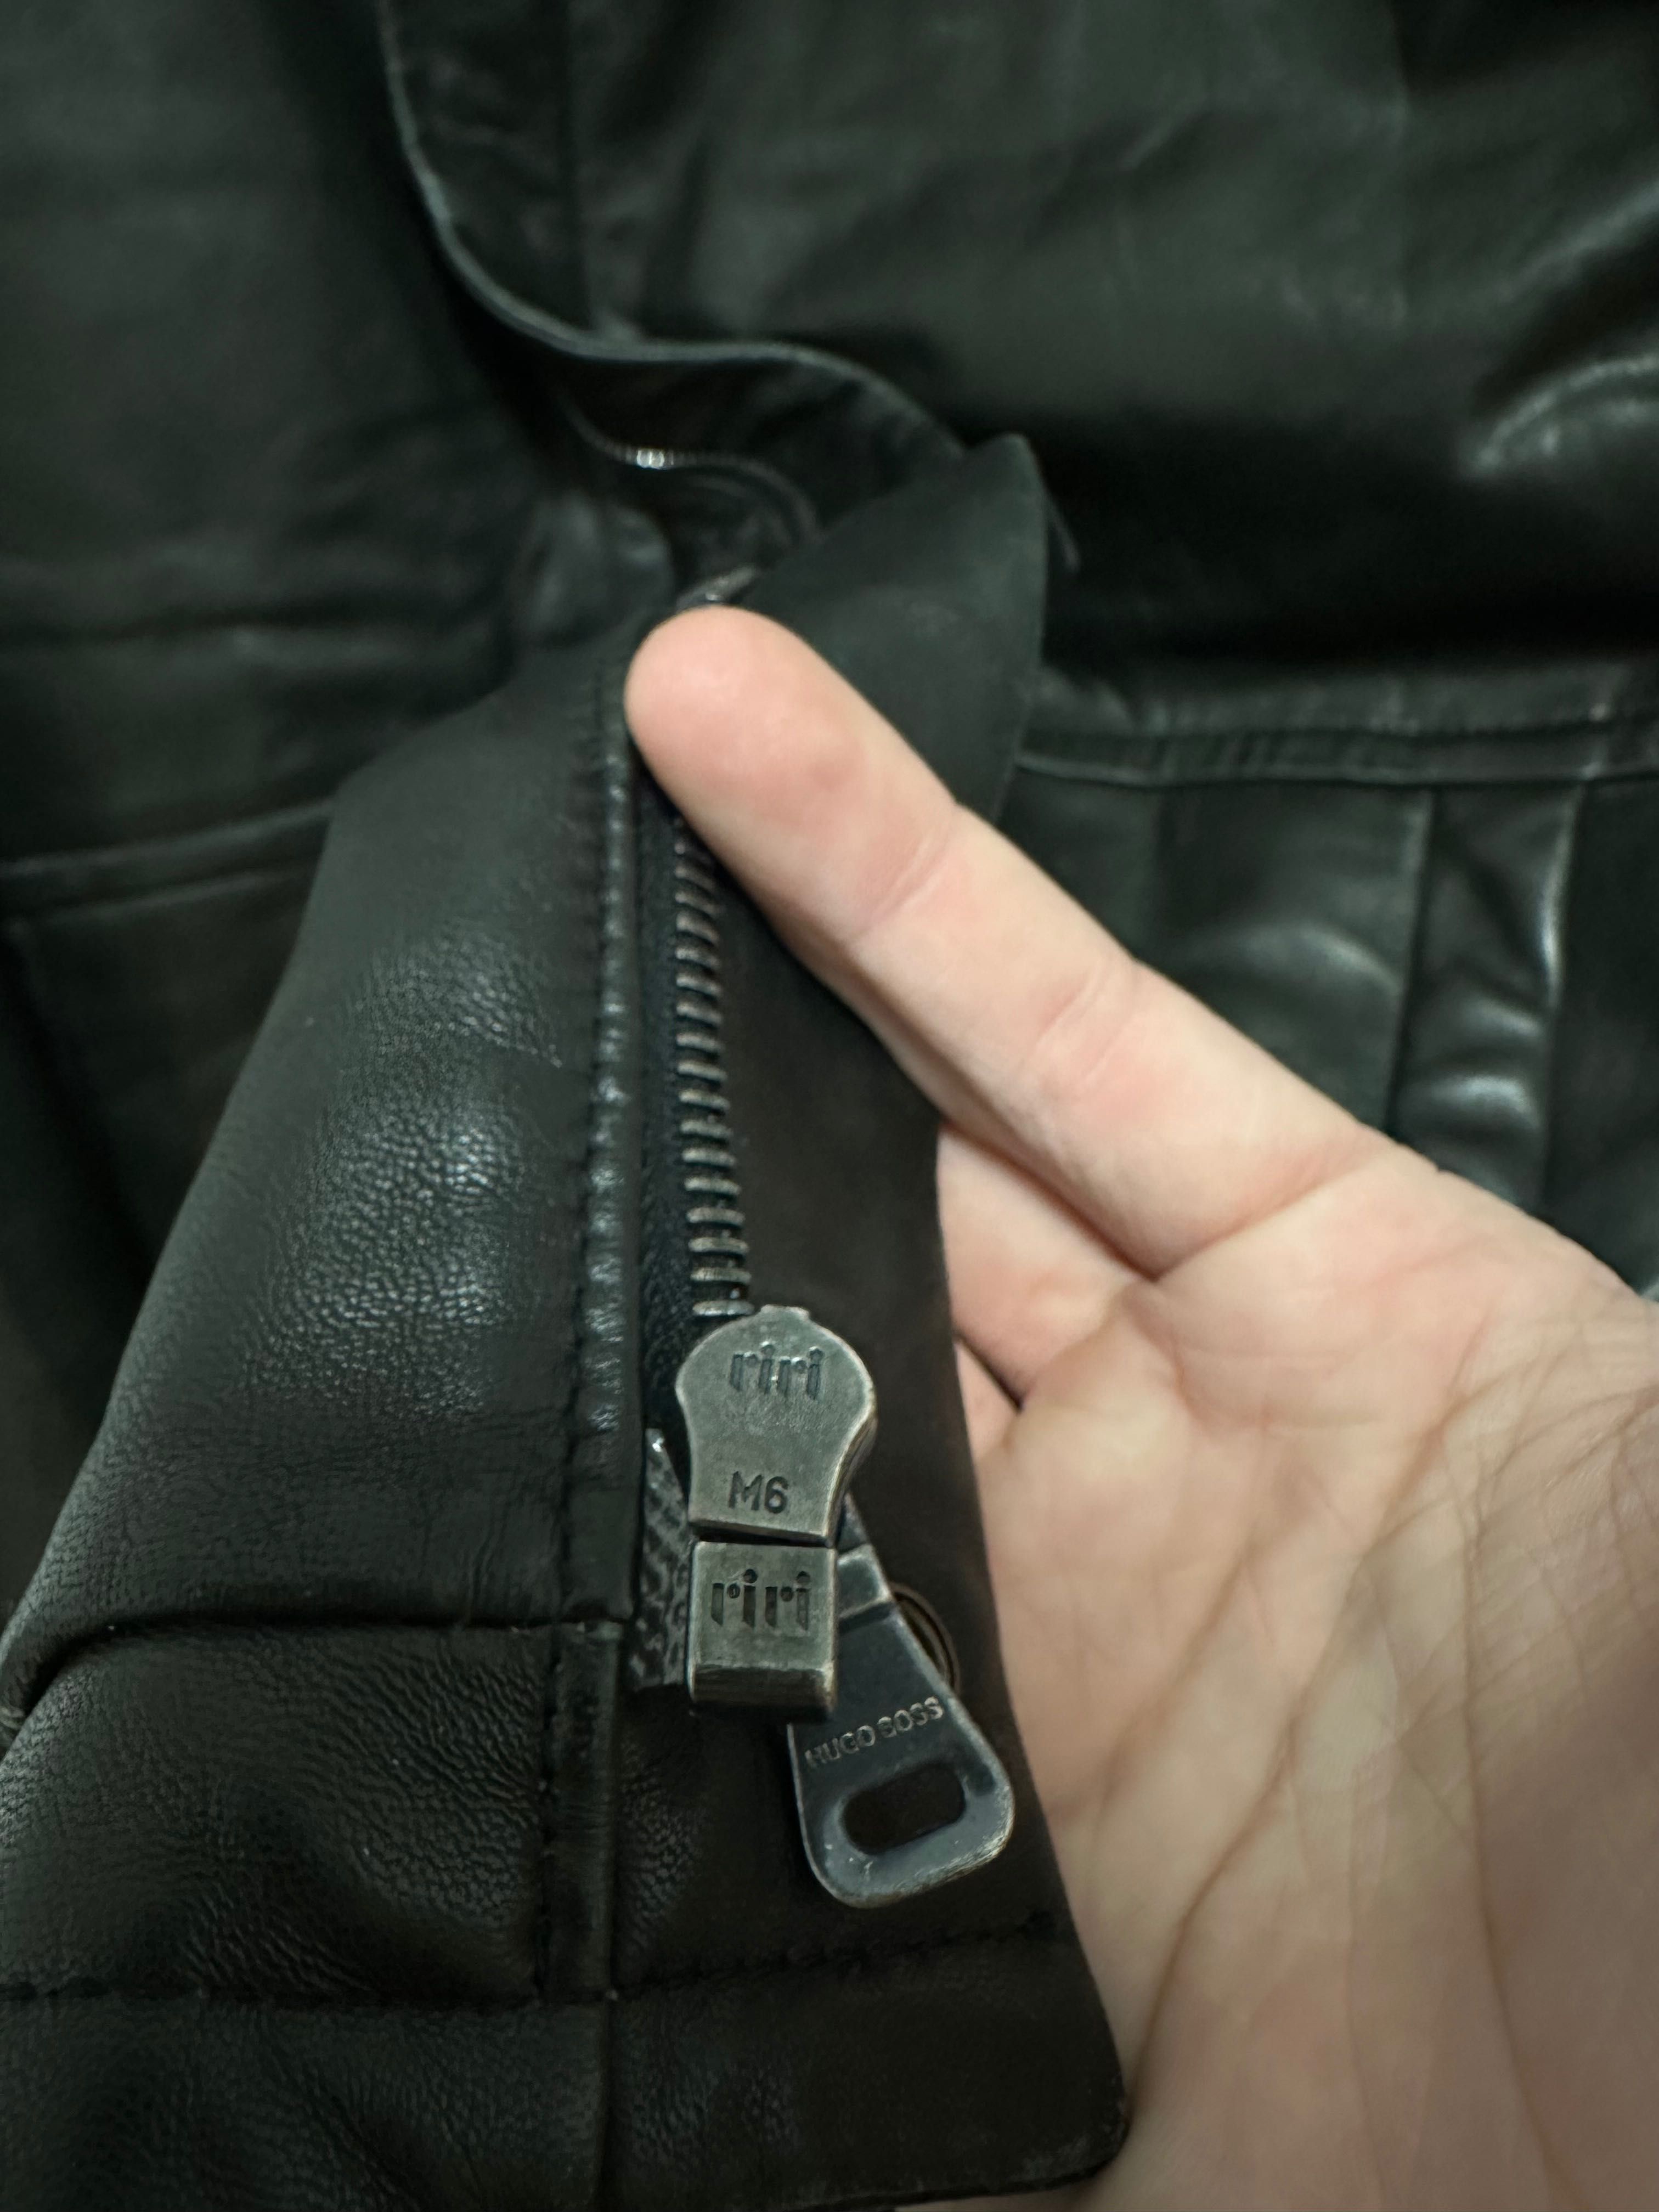 Кожаная куртка Hugo Boss M размер leather jacket Uniqlo